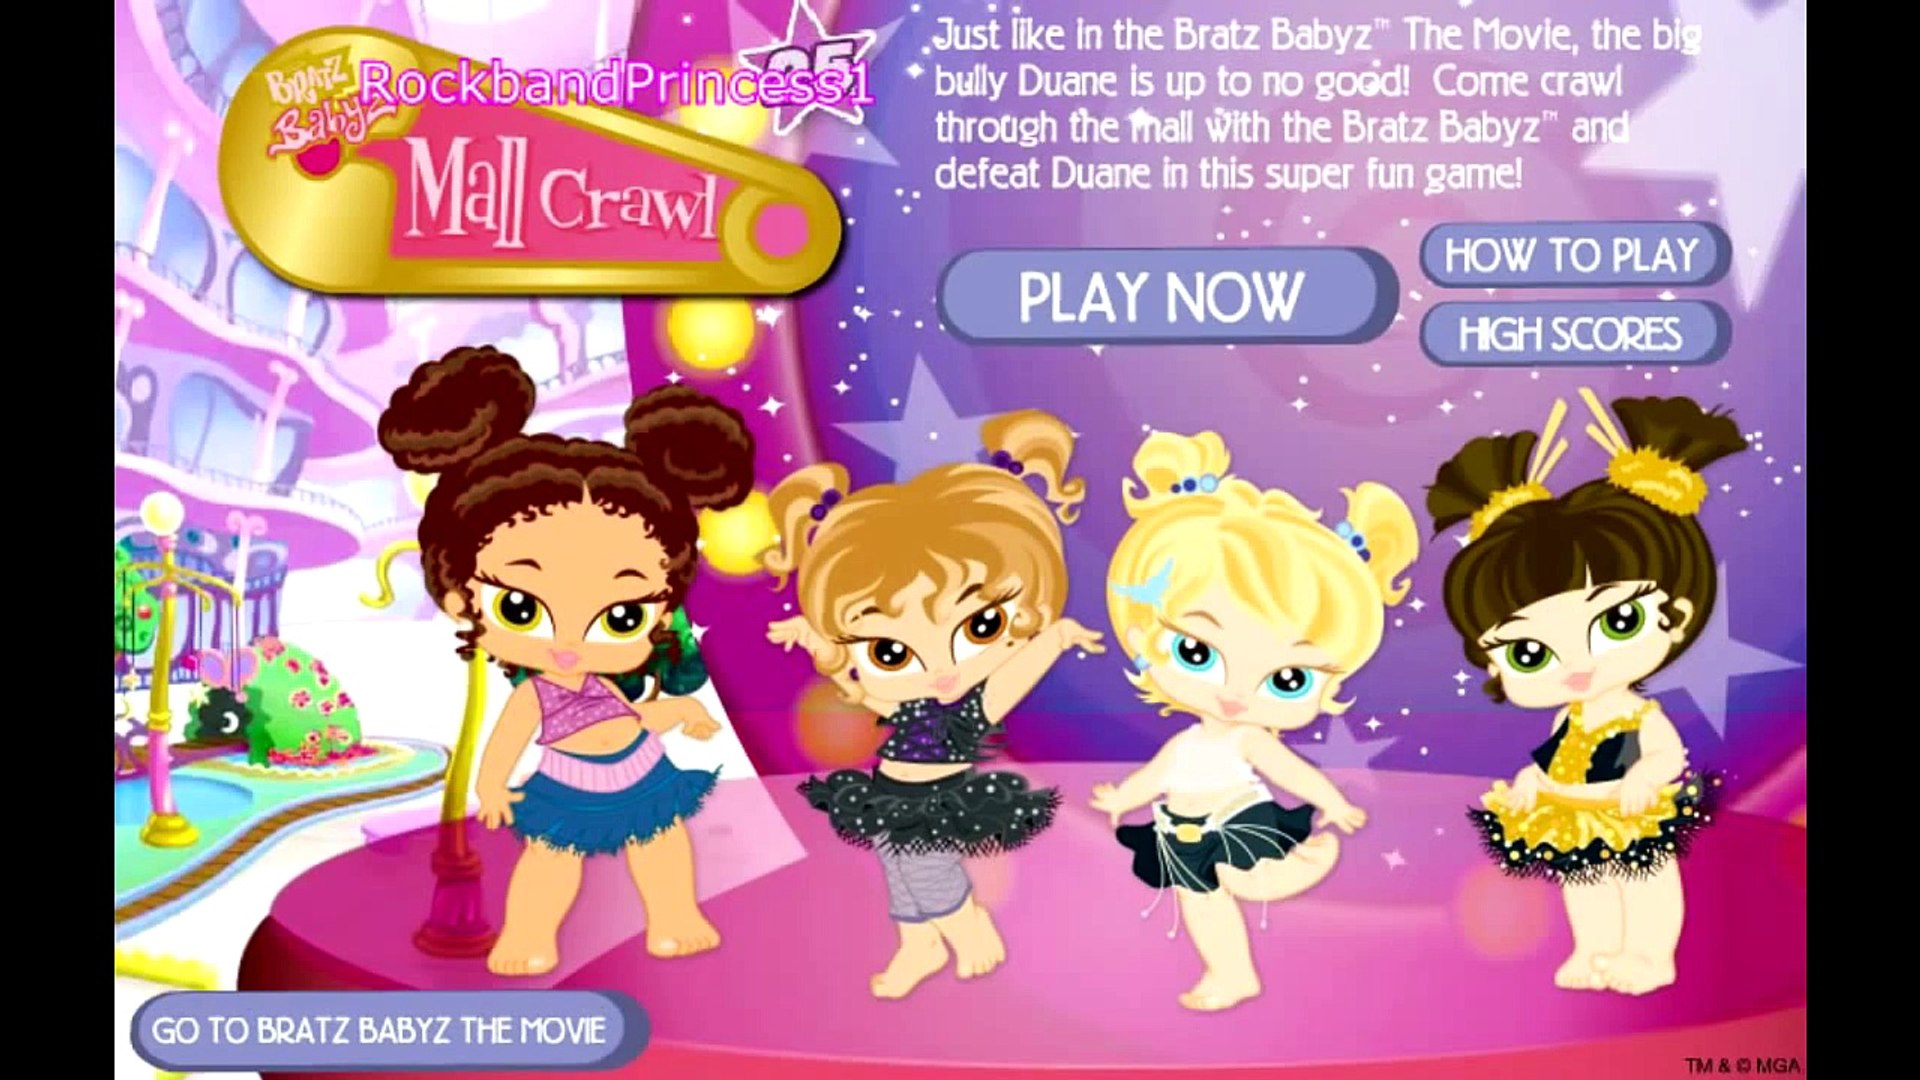 Bratz Online Games Bratz Babyz Mall Crawl Game - Dailymotion Video